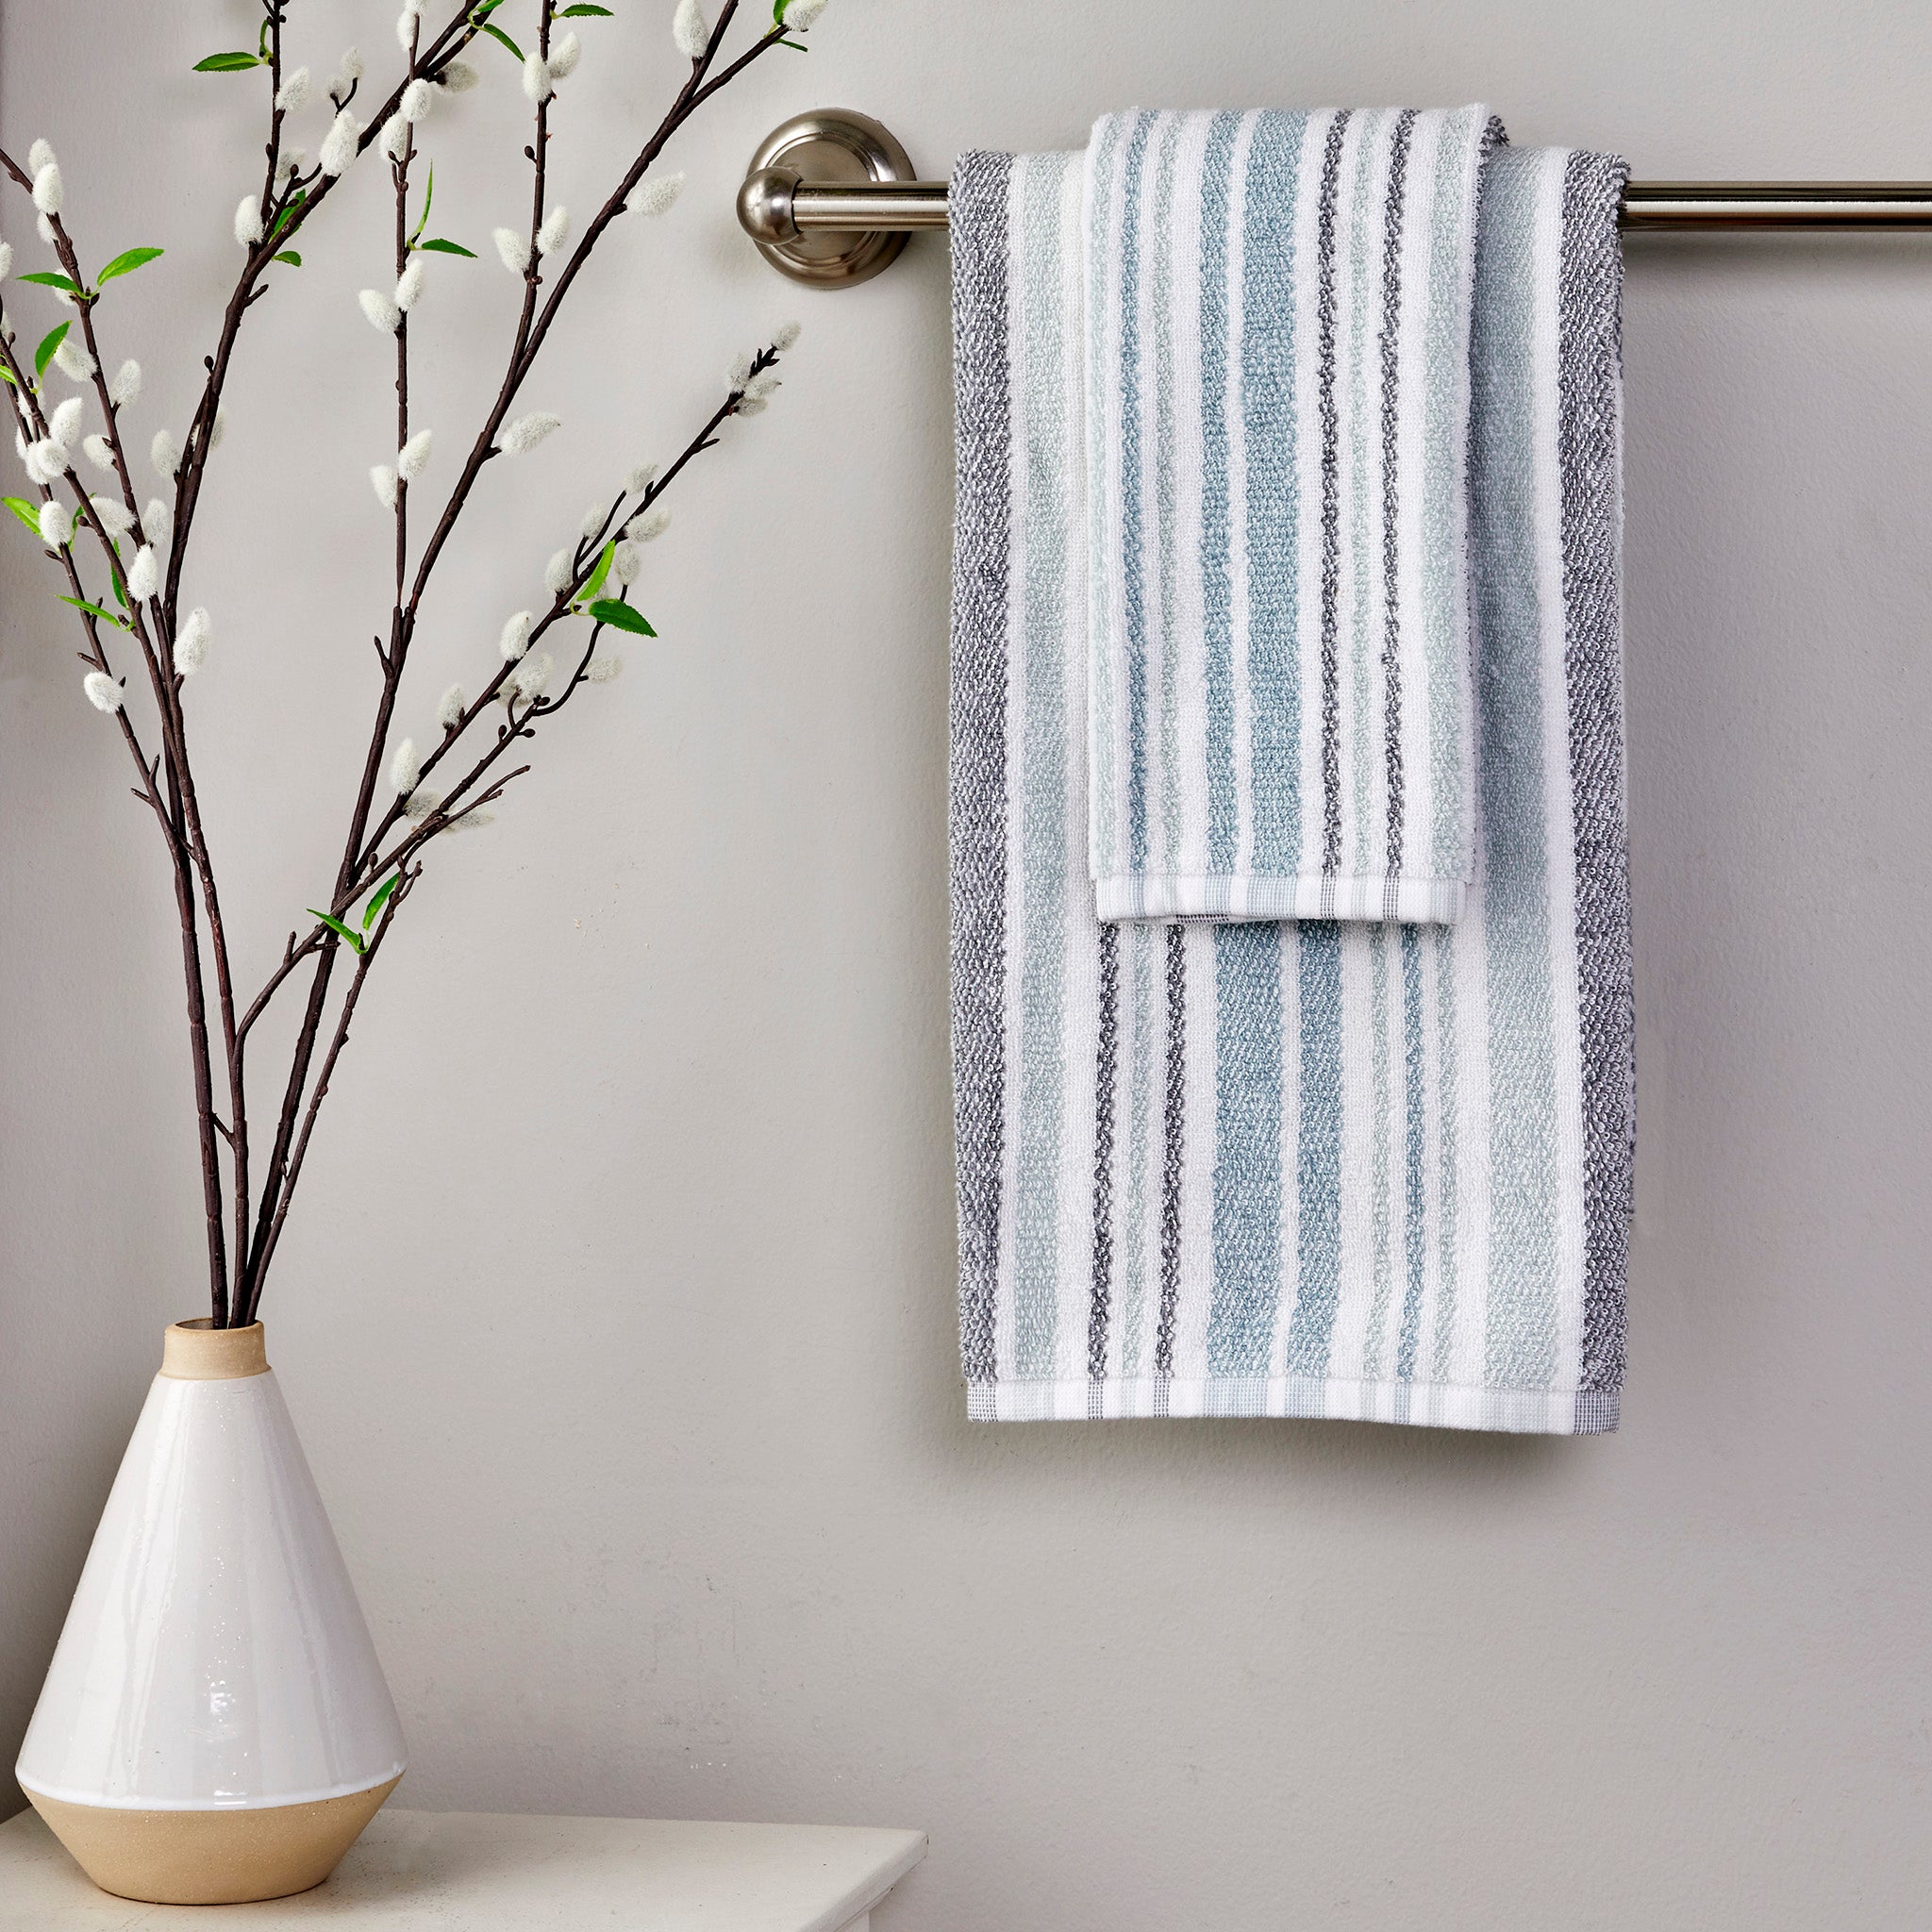 hotel Stripe Style Towels Standard Textile Bath Towels 30x54